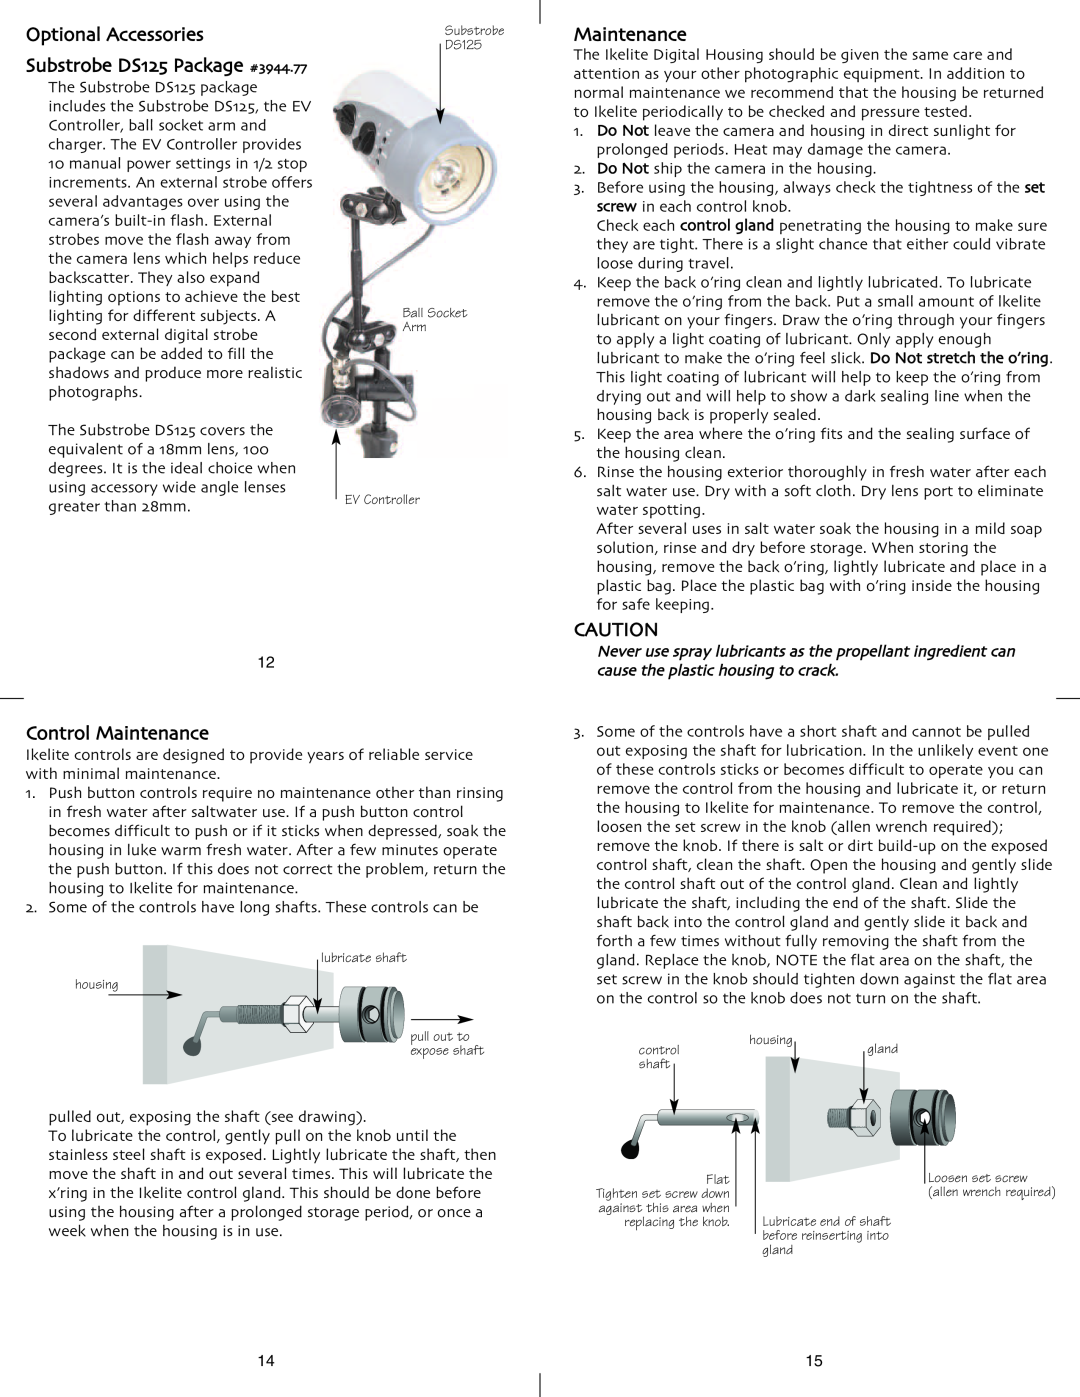 Ikelite SP-500 instruction manual Optional Accessories, Control Maintenance 